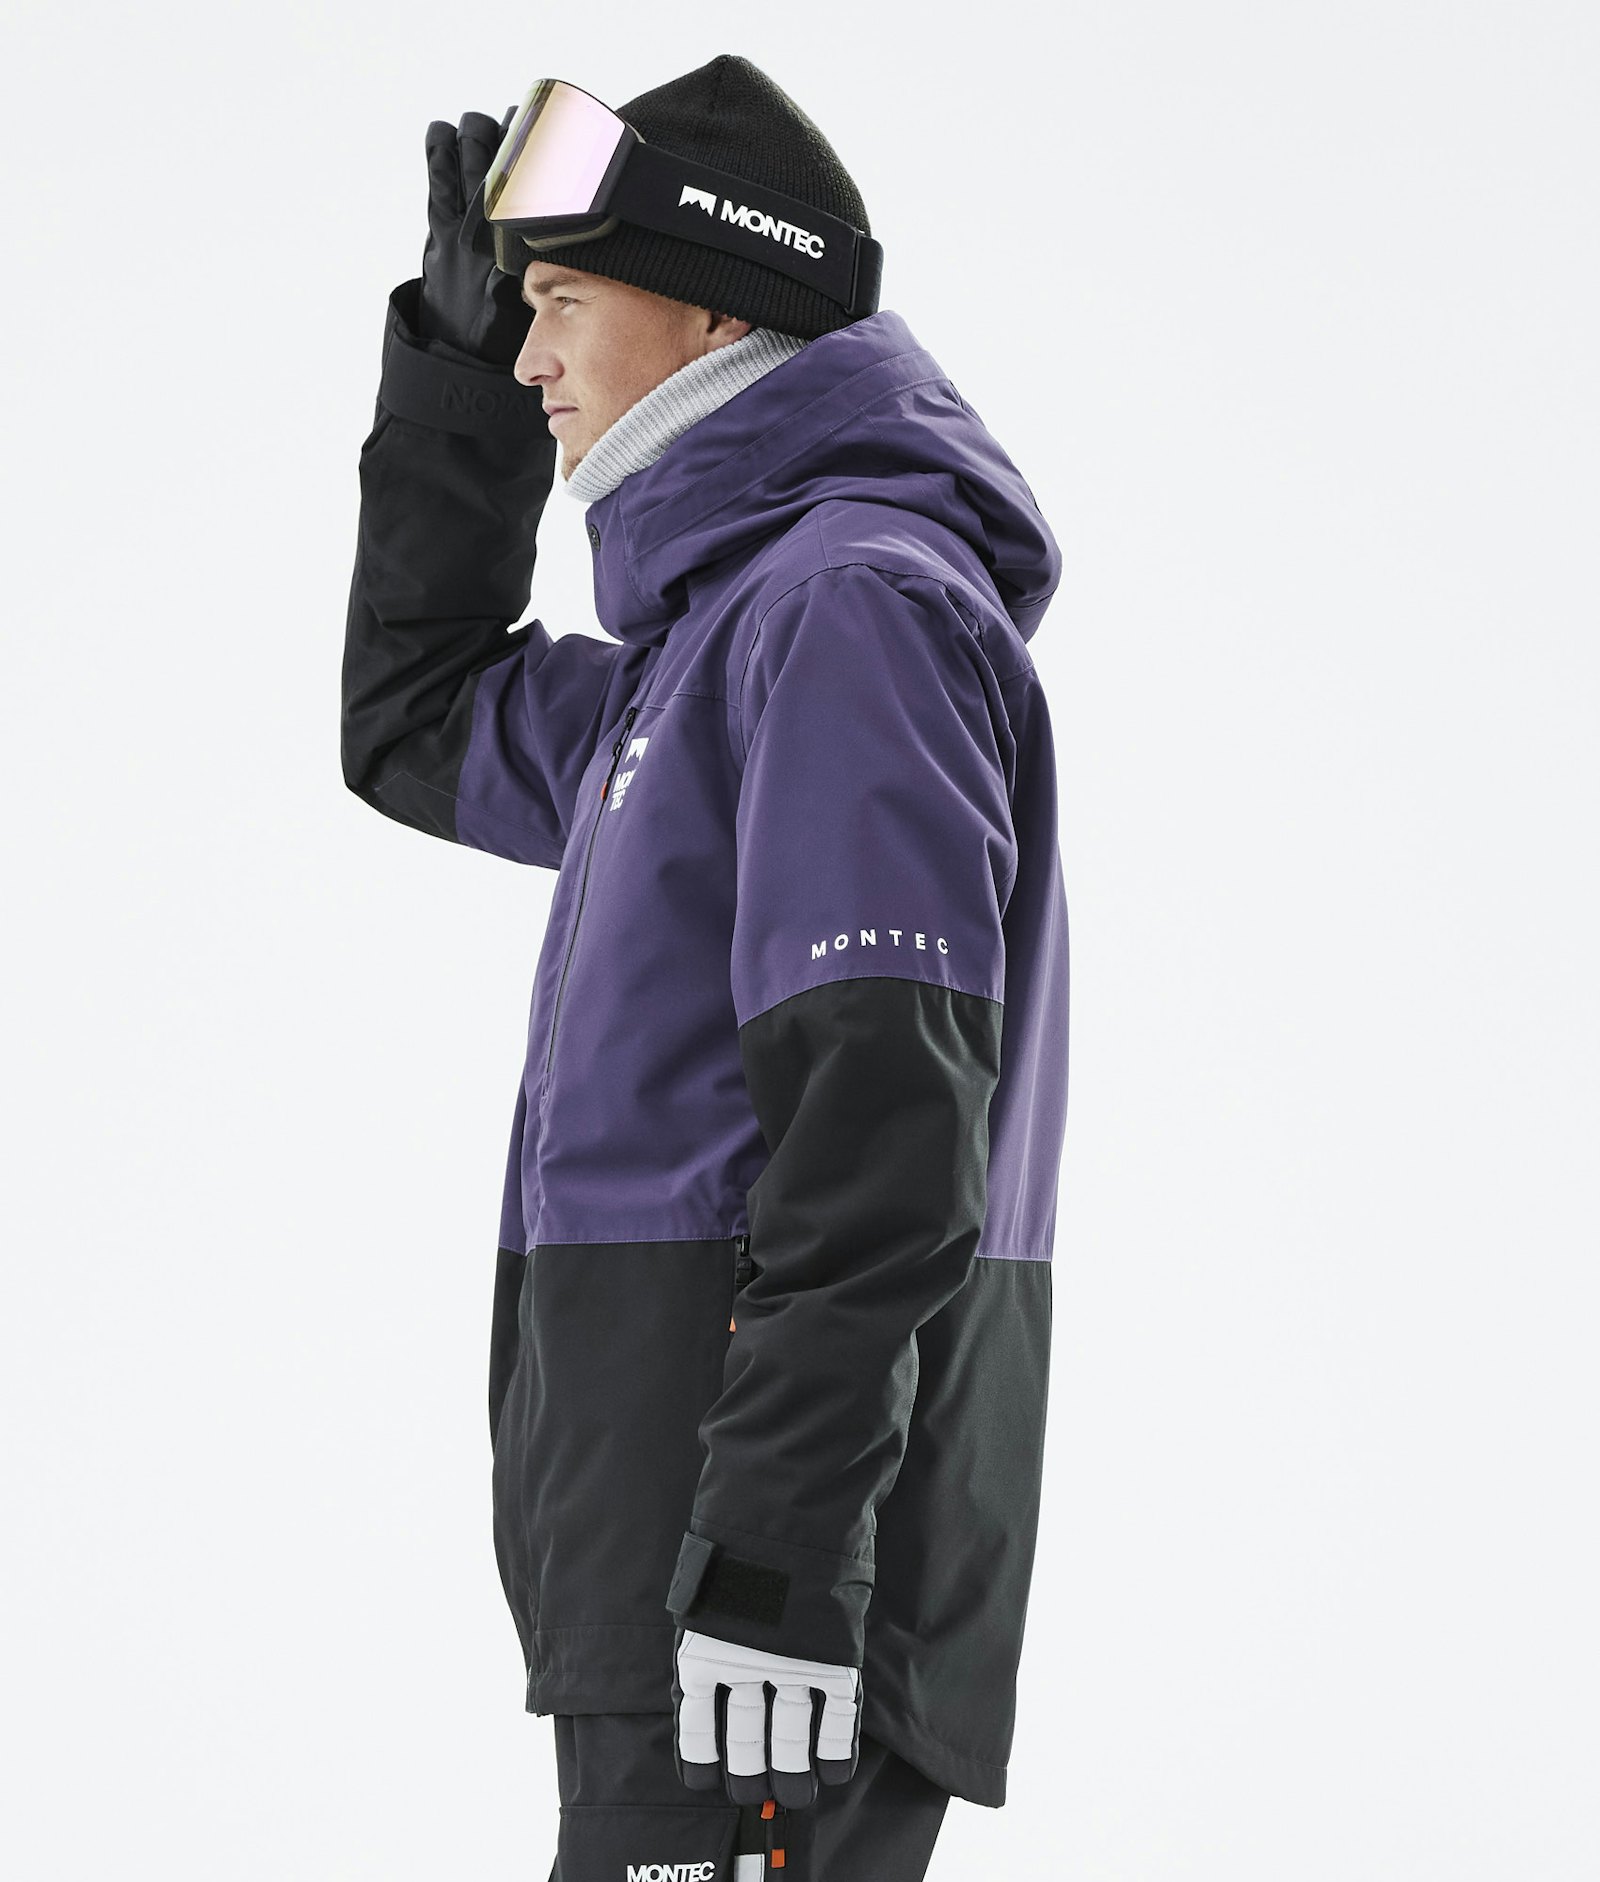 Fawk 2021 Veste de Ski Homme Purple/Black